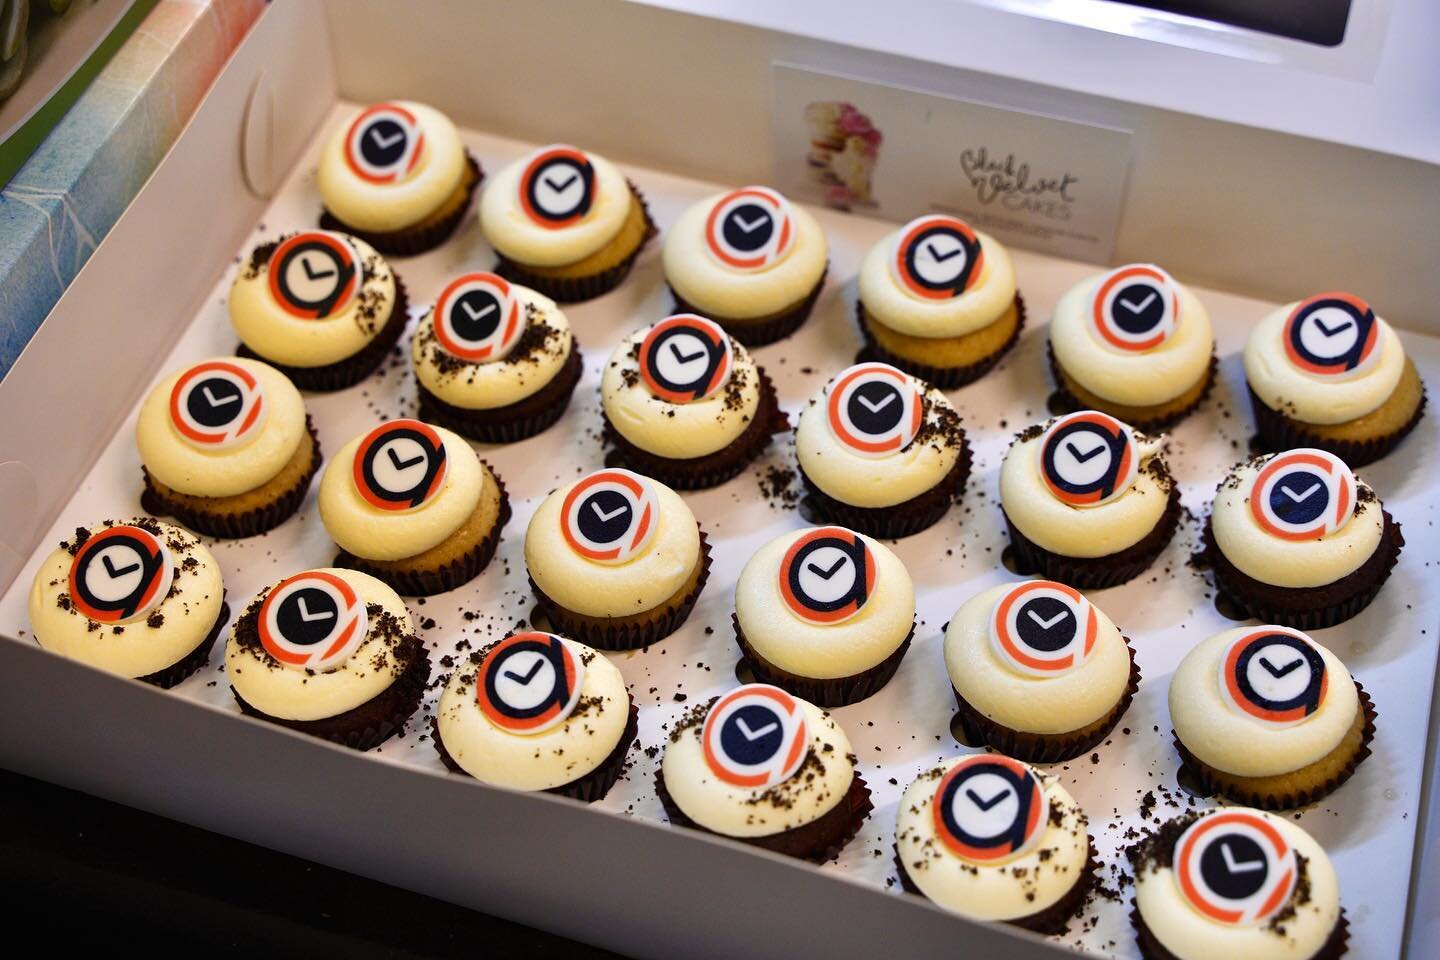 Loved the custom cupcakes made by @bv_sydney! 

#watchfest #cupcake #cakes #blackvelvet